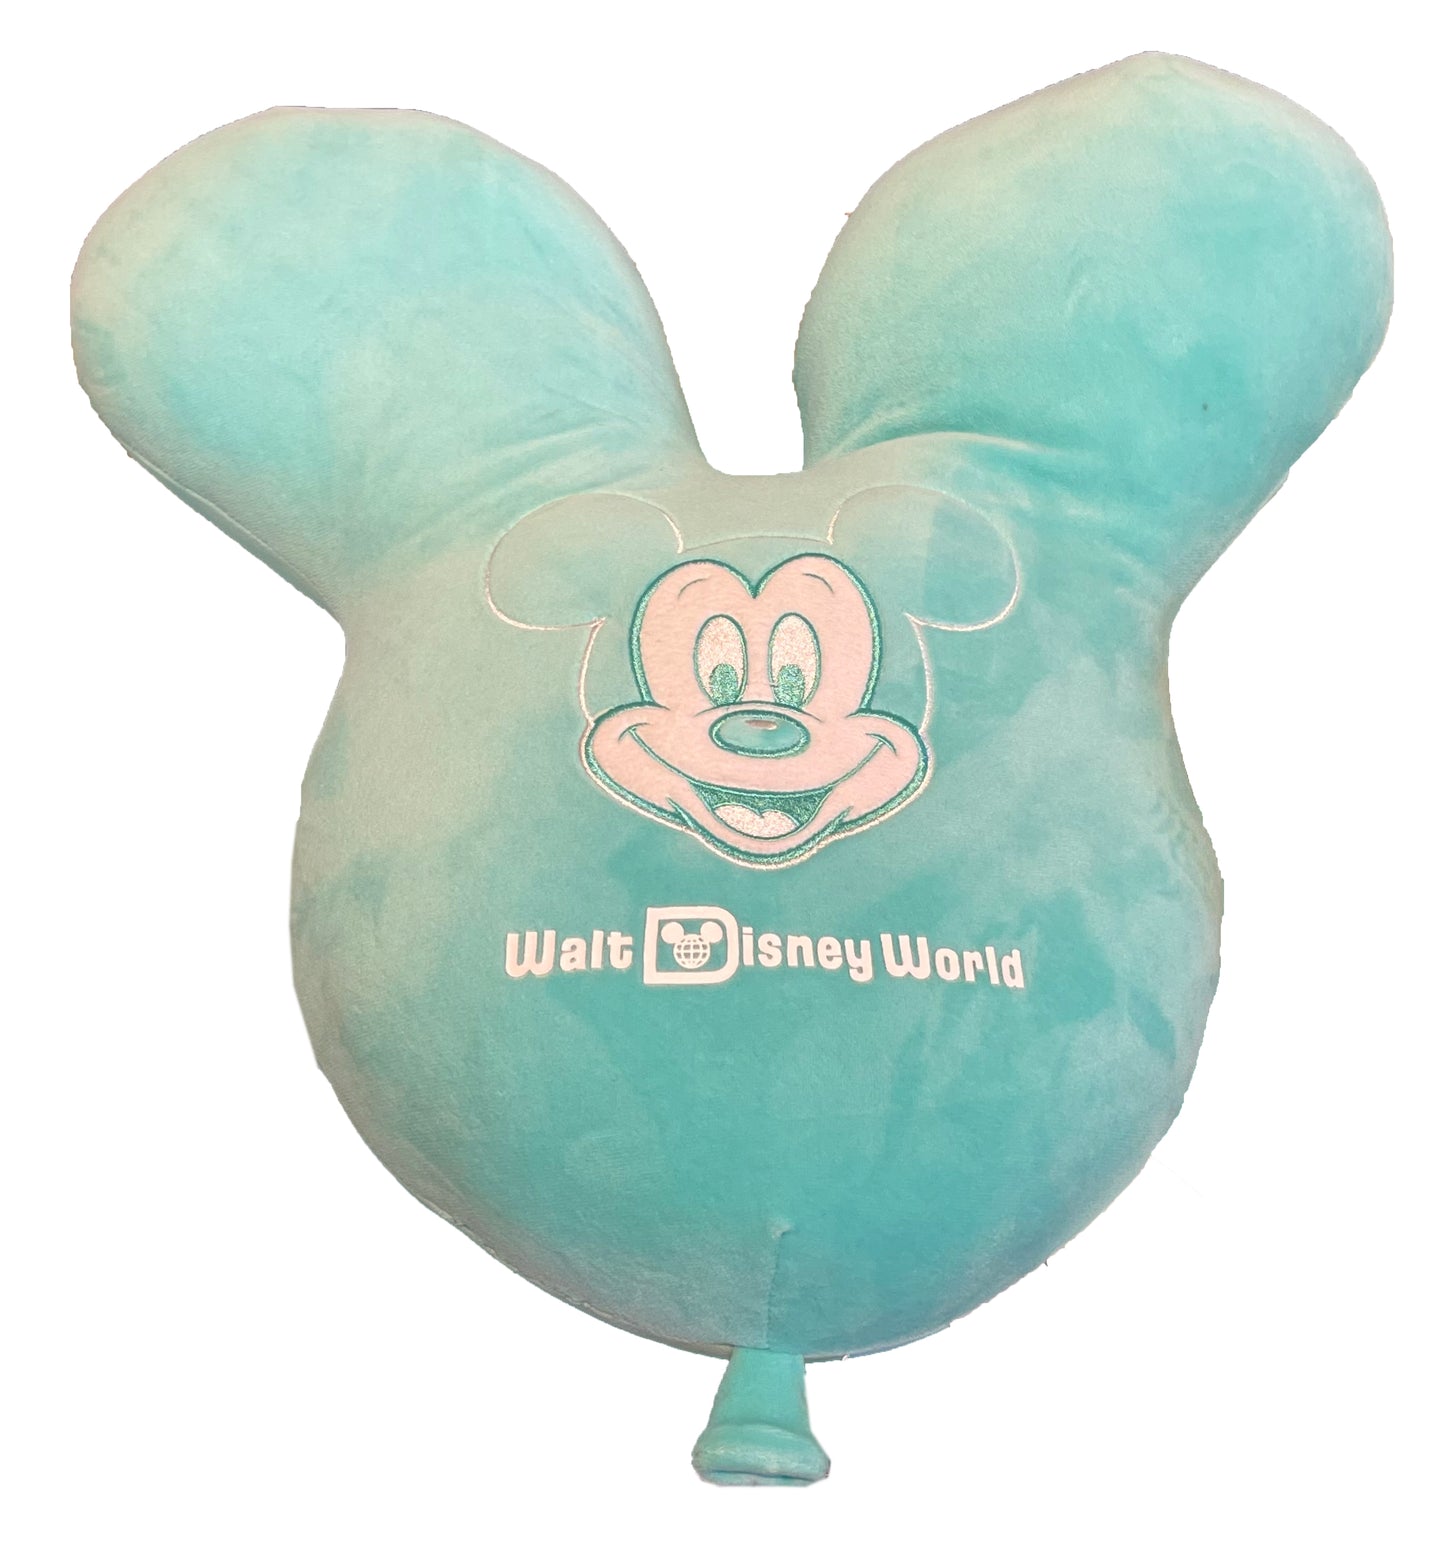 Walt Disney World Play In The Park Mickey Balloon Throw Pillow